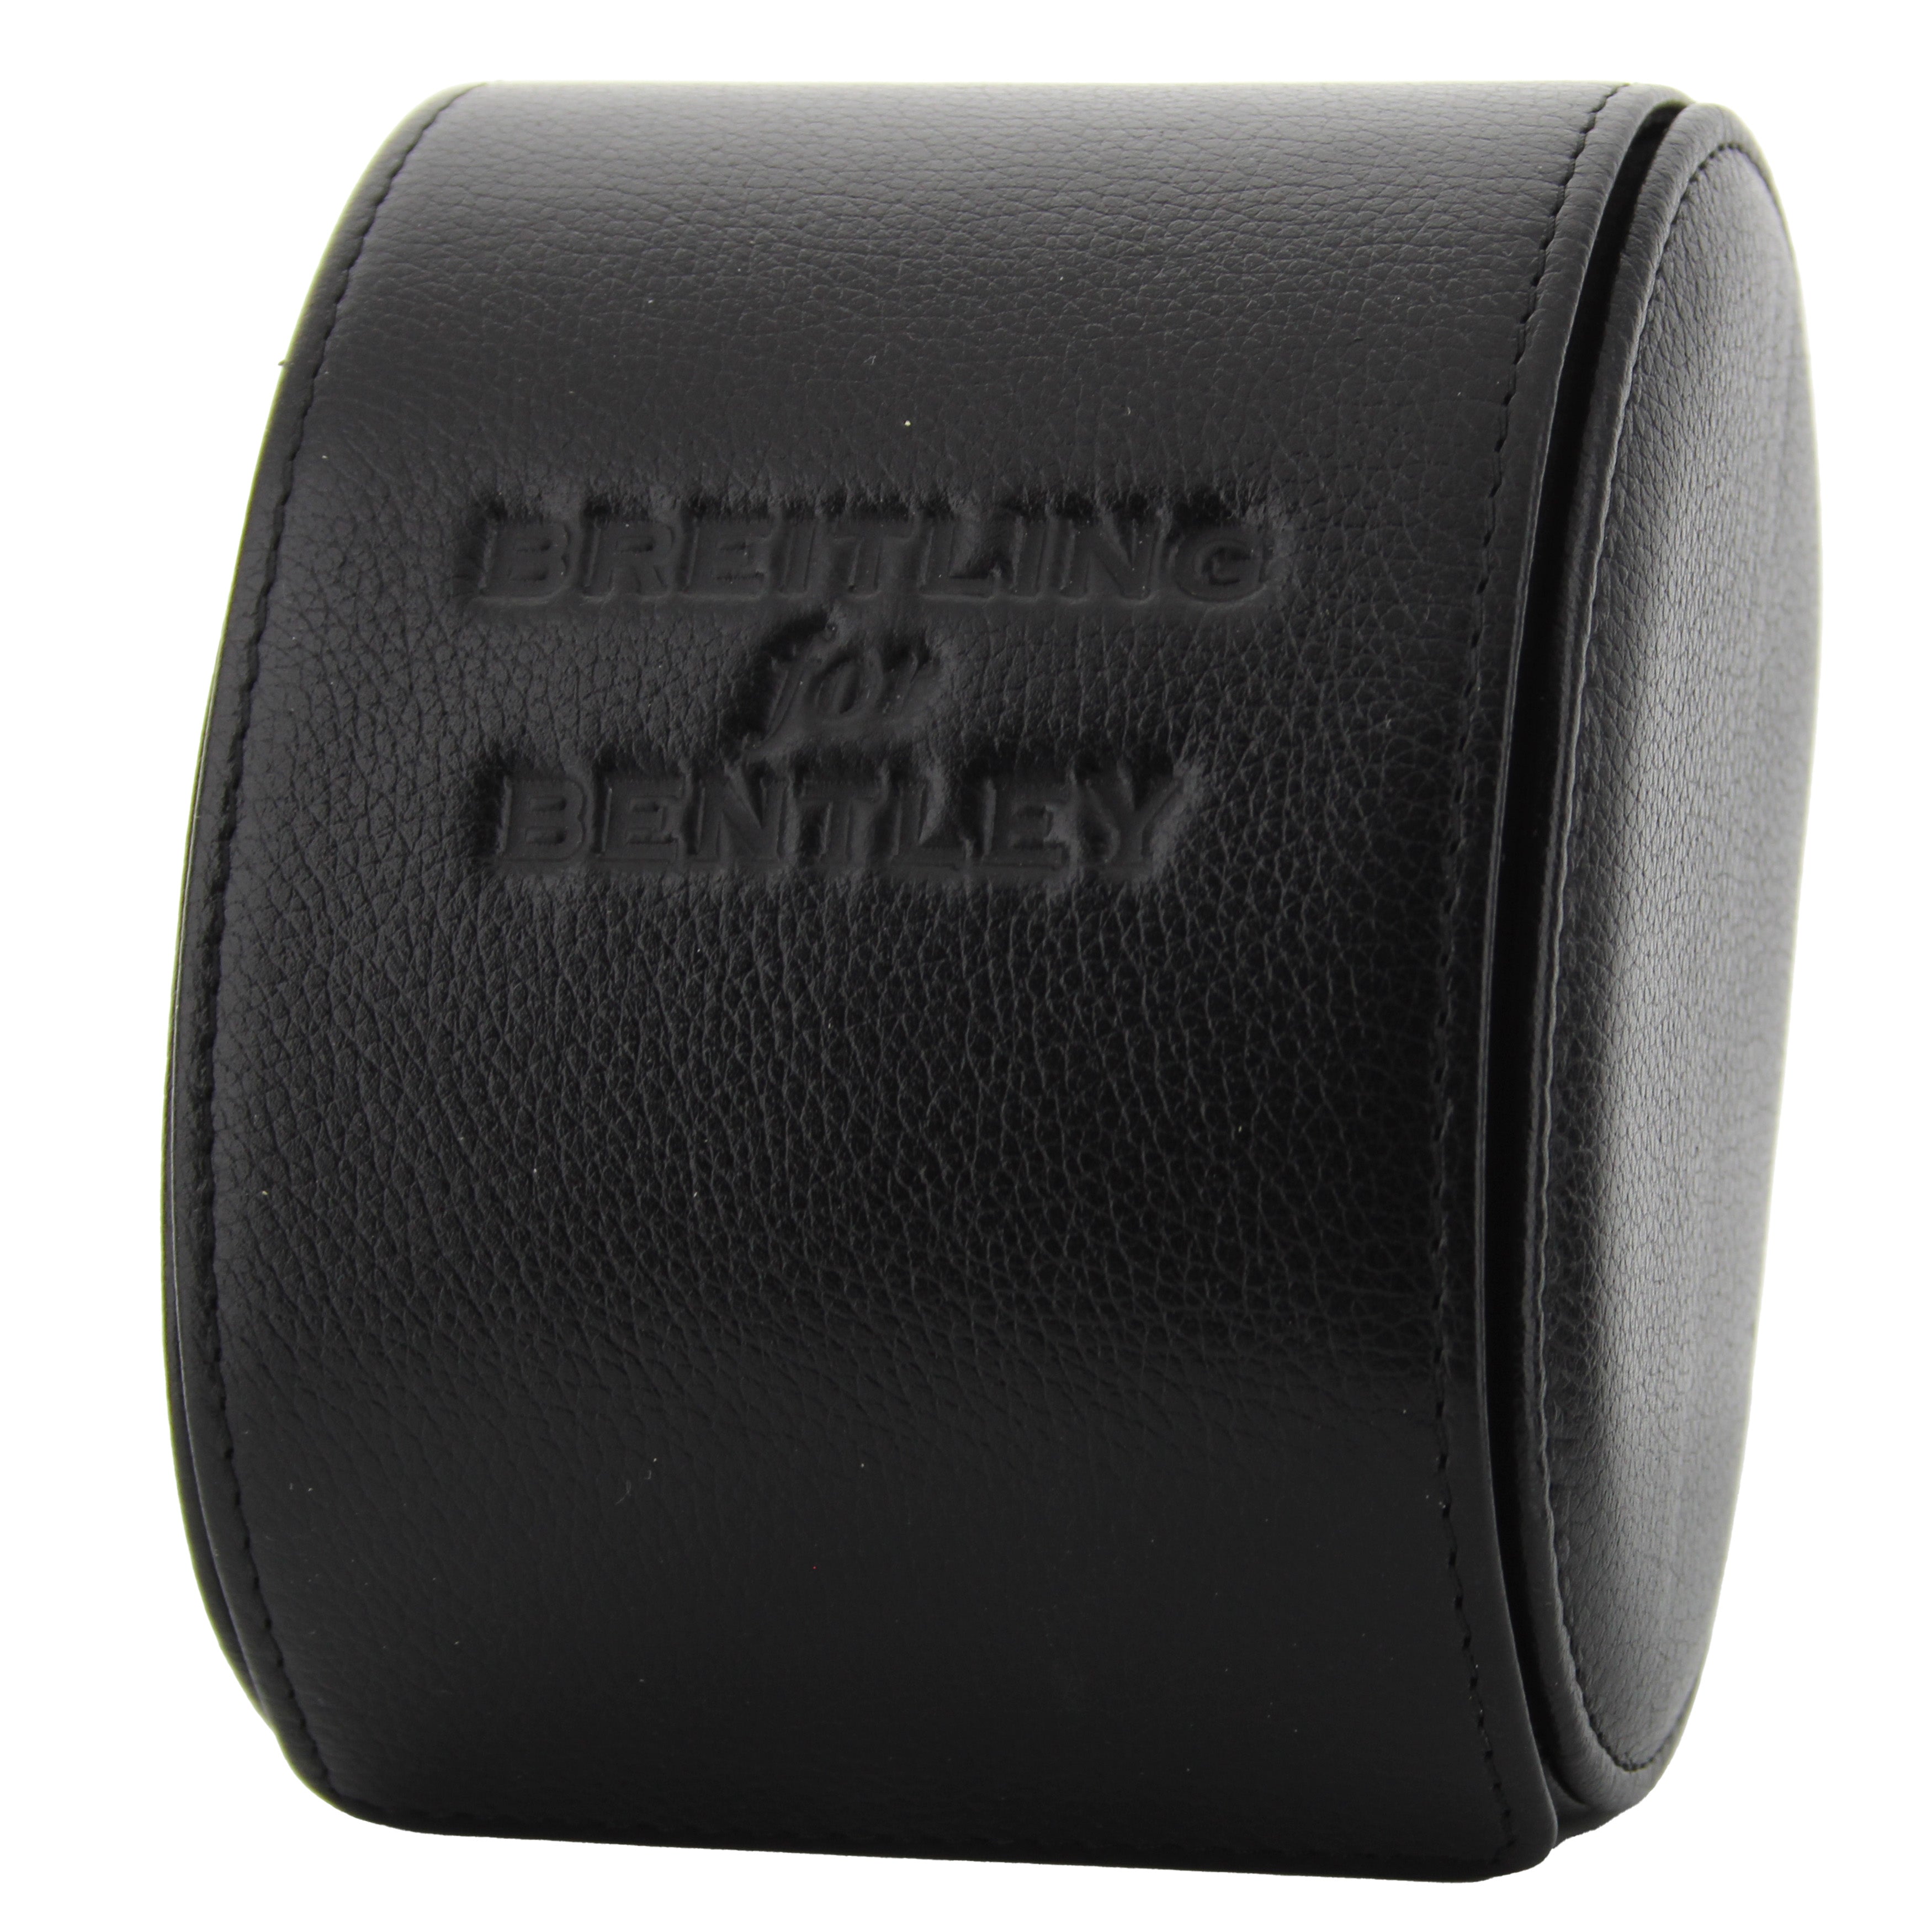 Breitling Bentley GMT Light Body Chronograph Black Titanium 49mm VB0432 Full Set